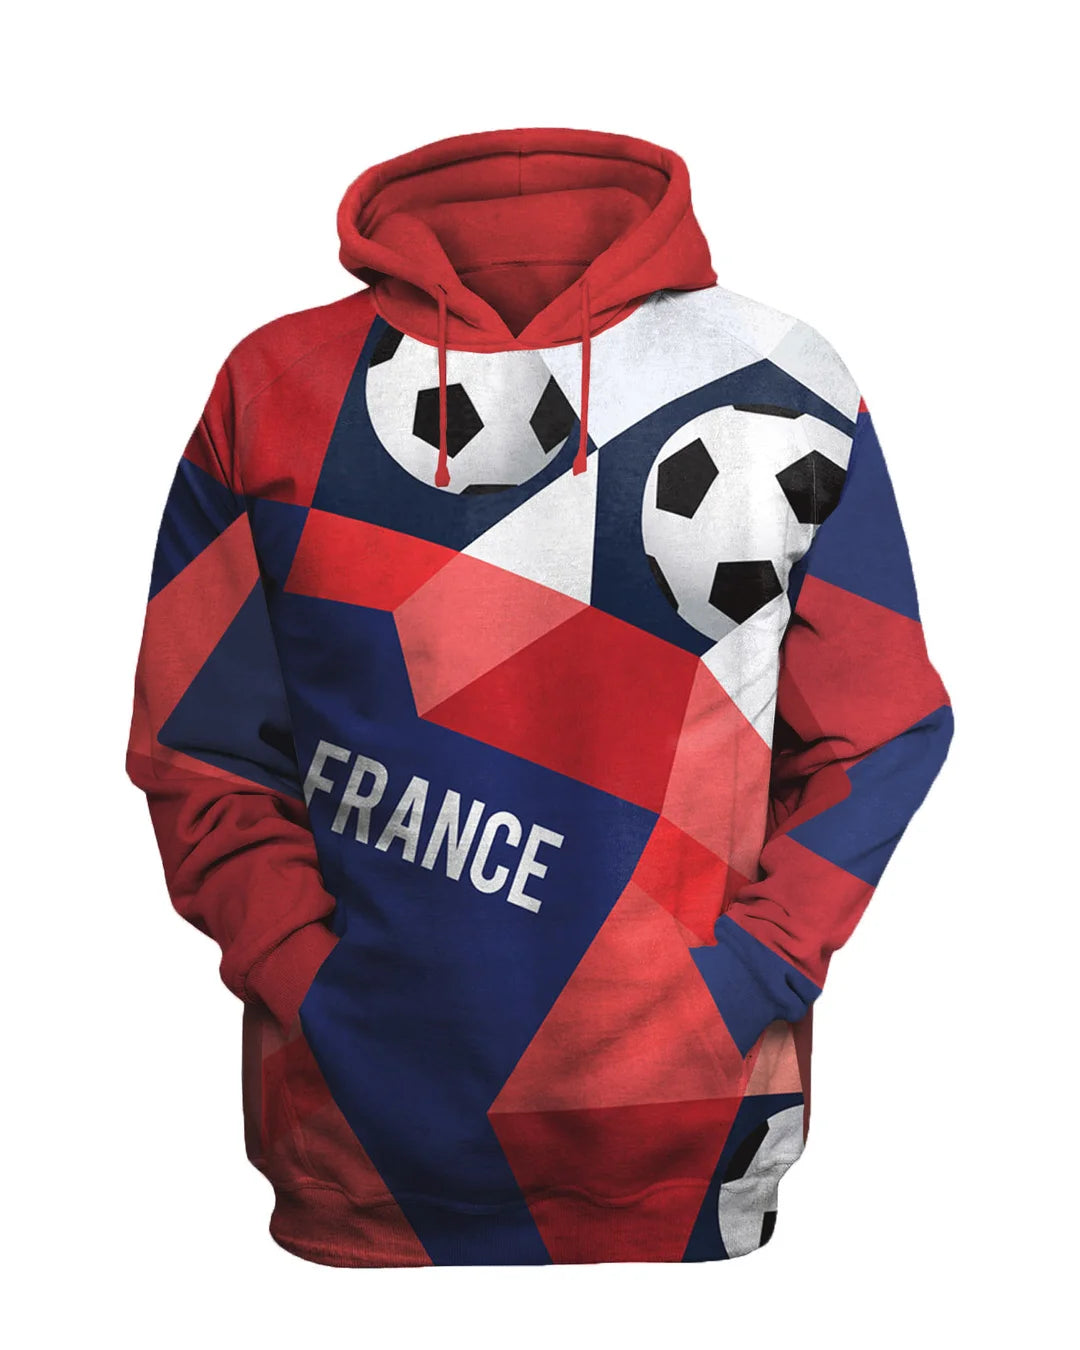 France Printed Sweatshirt Set - DUVAL